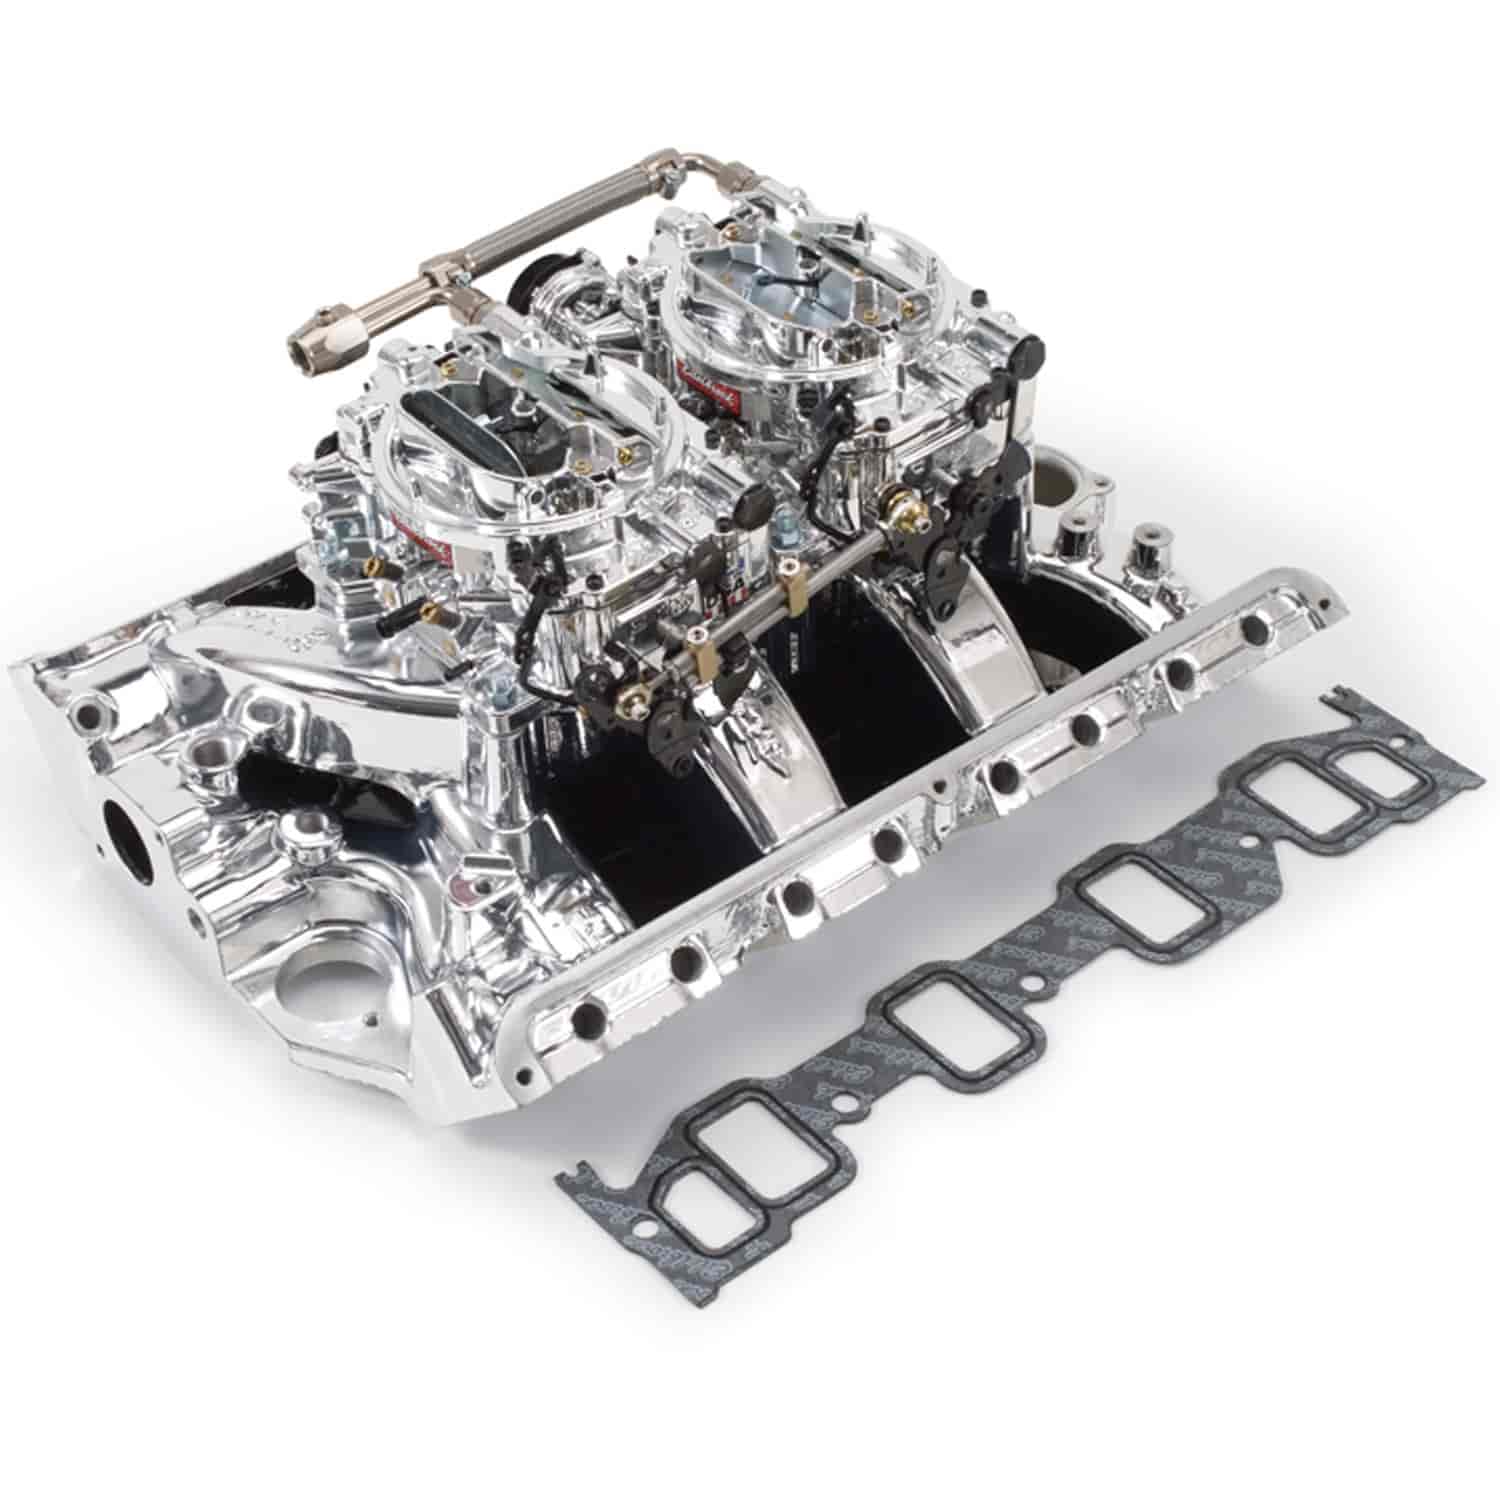 RPM Dual-Quad Manifold and Carburetor Kit for Ford FE 390-428 with Endurashine Finish